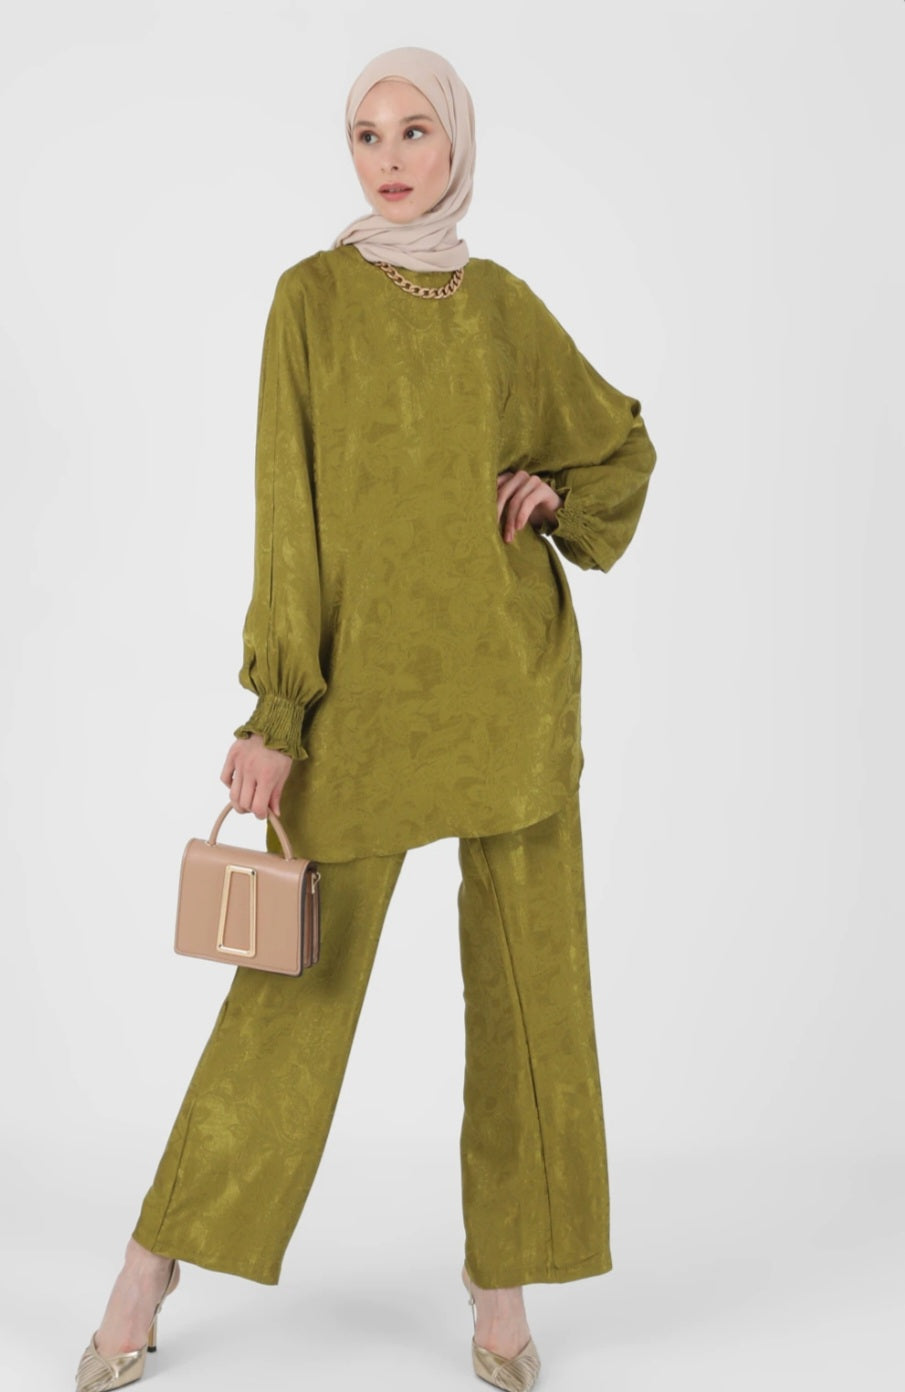 Refka Bat Sleeves Jacquard Satin Suit Oil Green